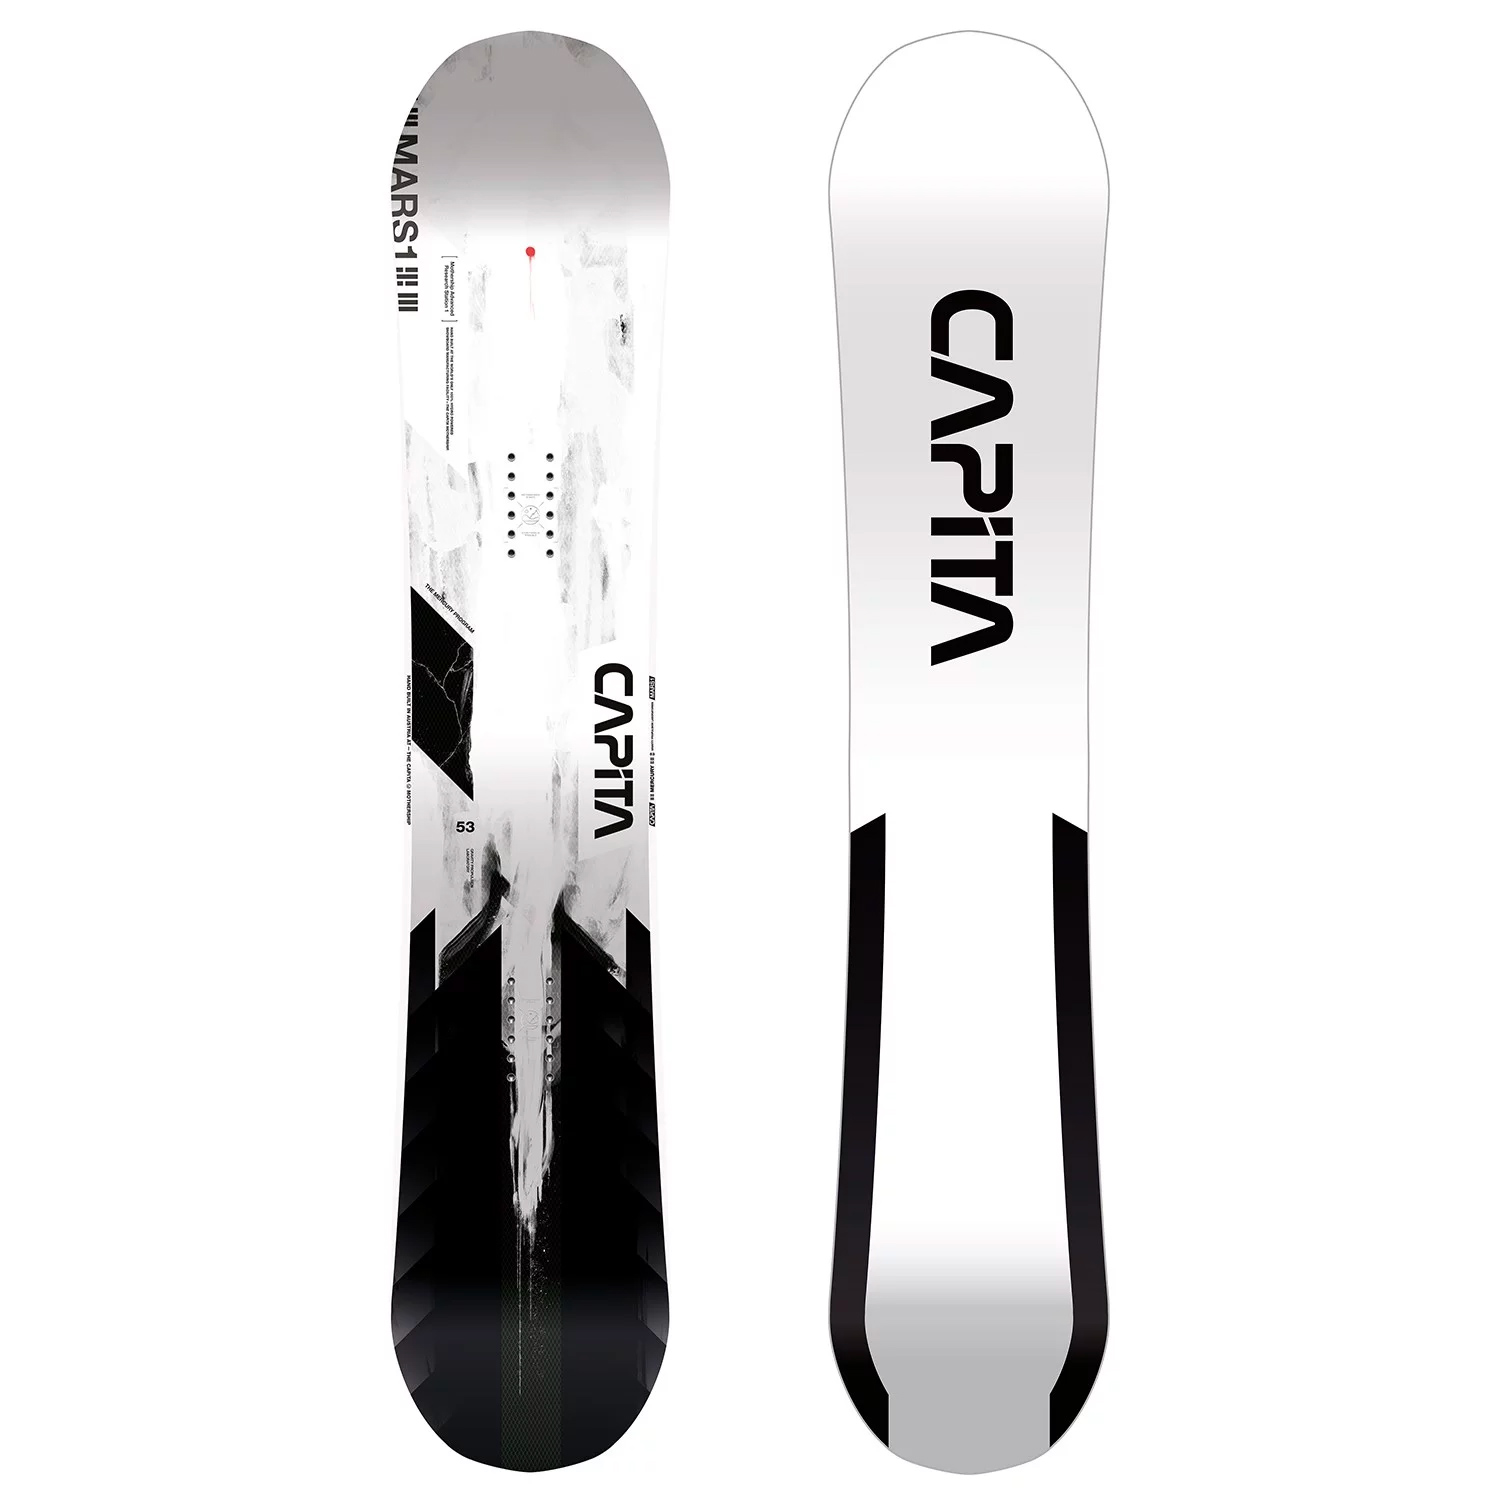 Capita Mercury Snowboard Review - Still my #1 do everything board